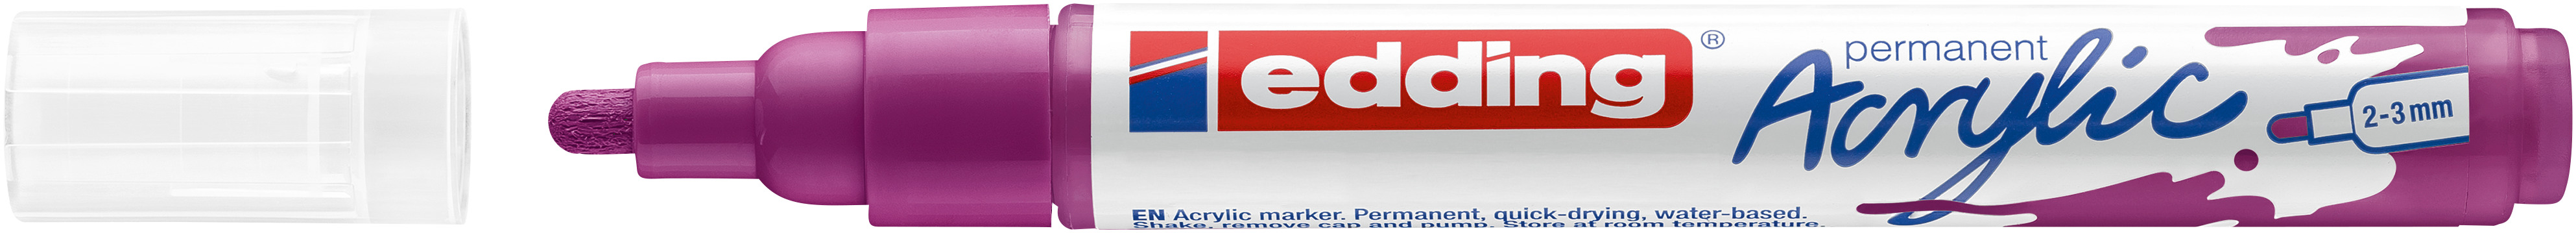 EDDING Acrylmarker 5100 2-3mm 5100-910 berry